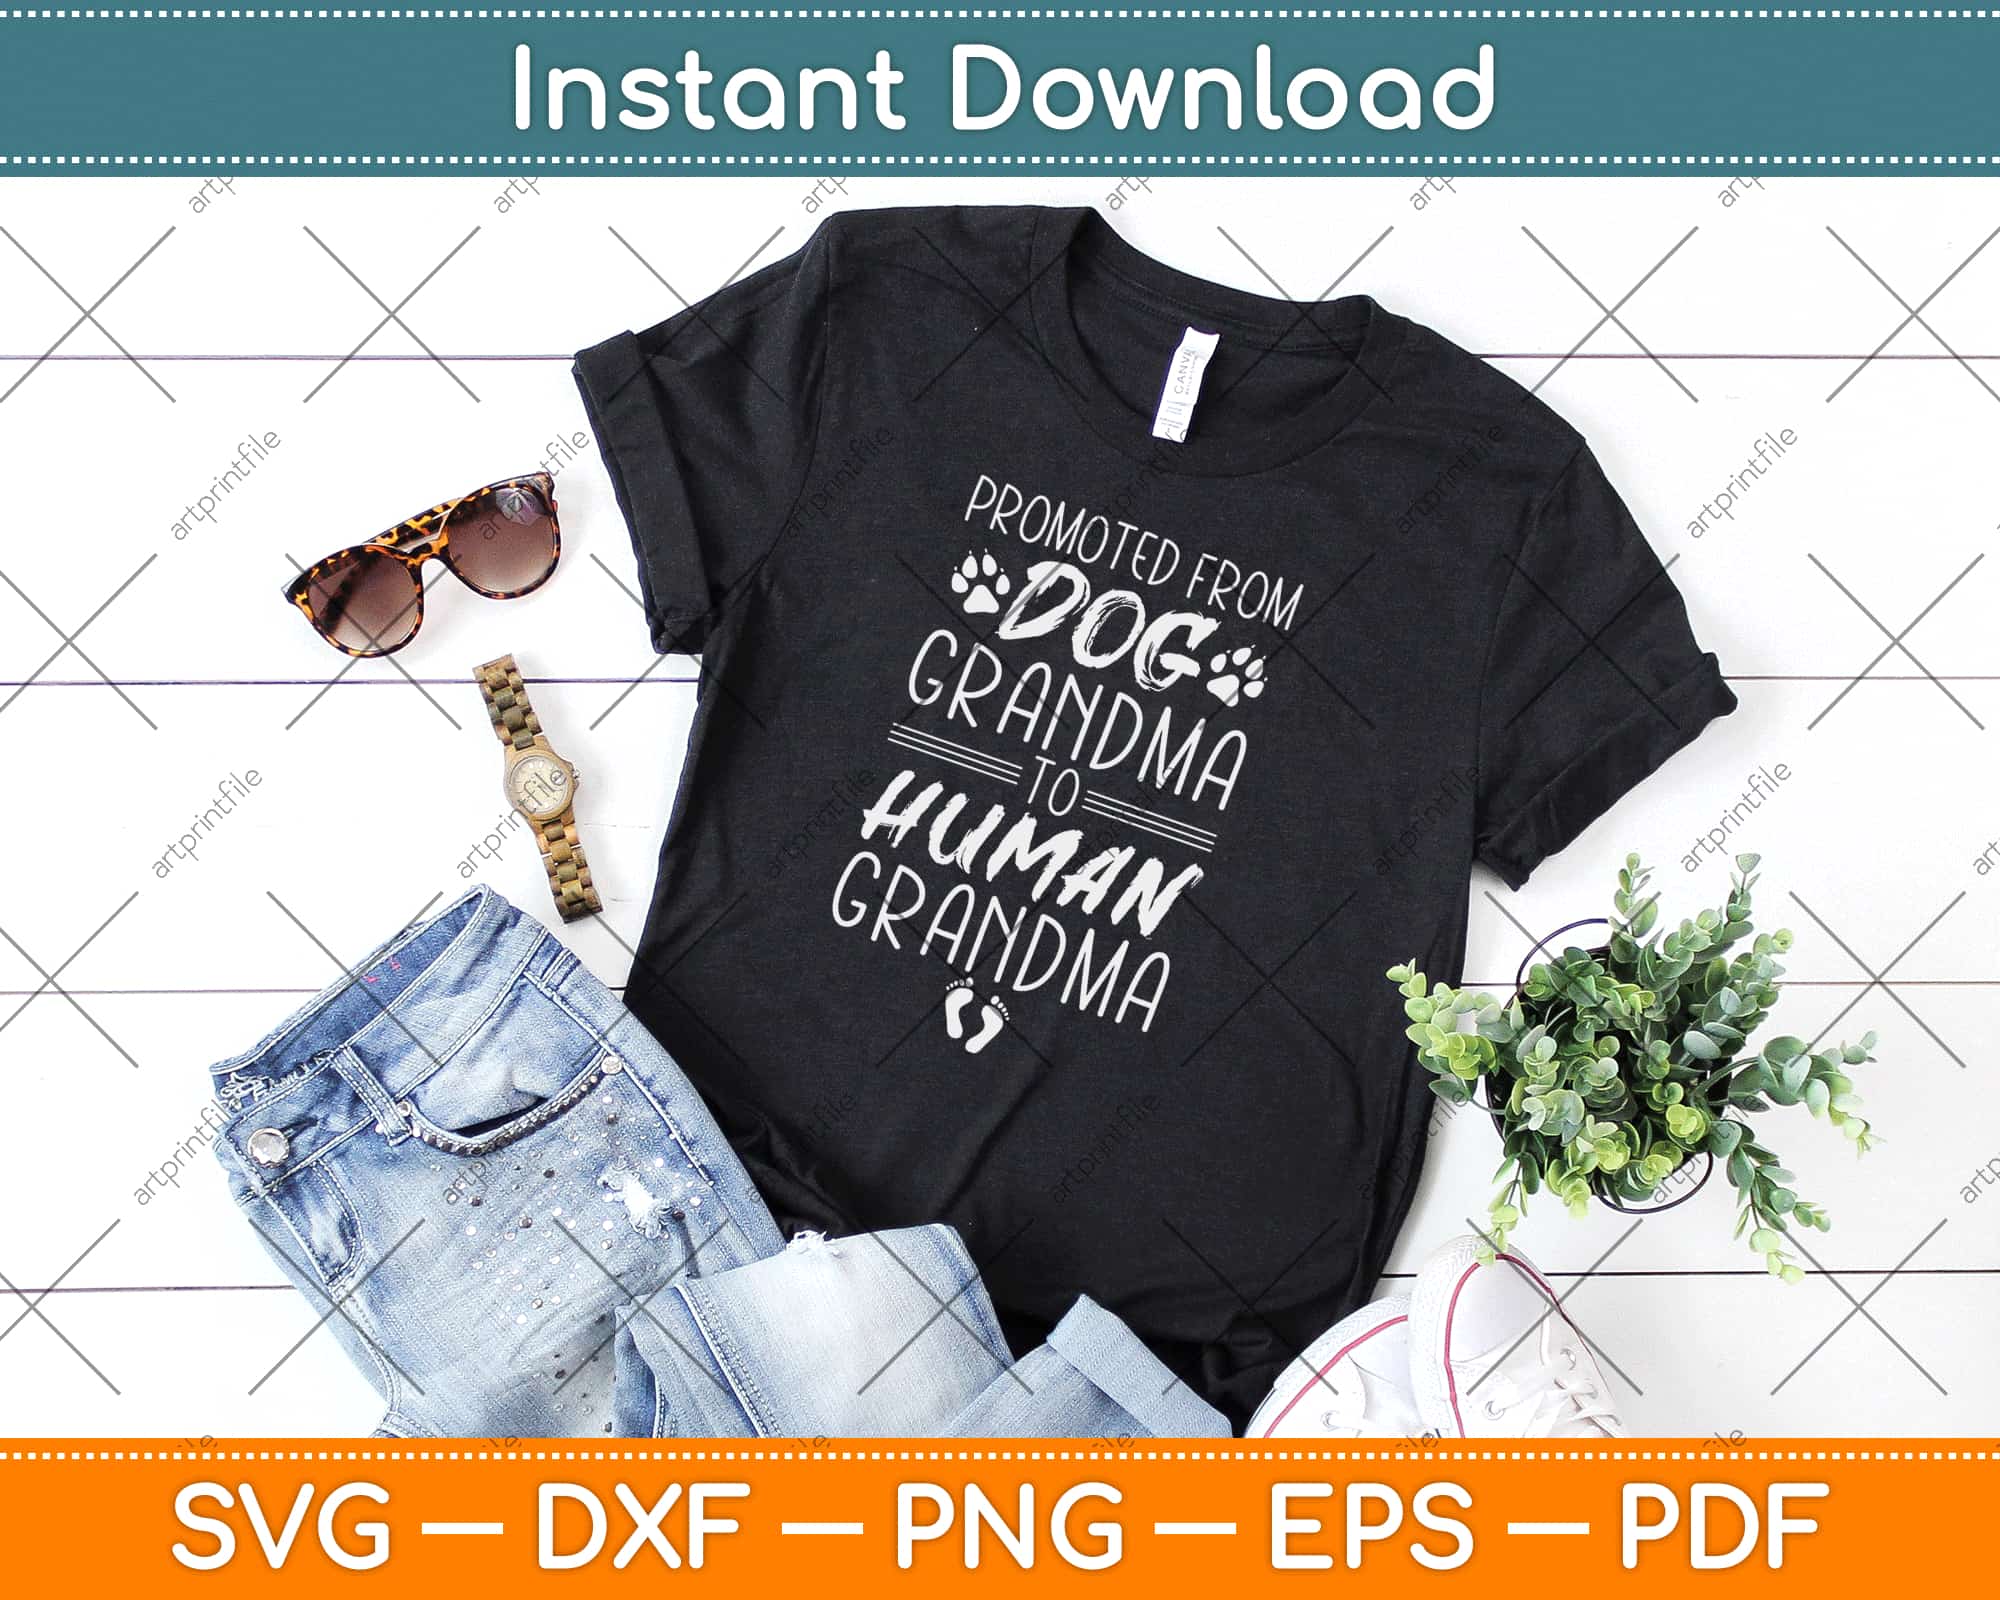 Download Promoted From Dog Grandma To Human Grandma Svg Png Design Craft Cut File Artprintfile